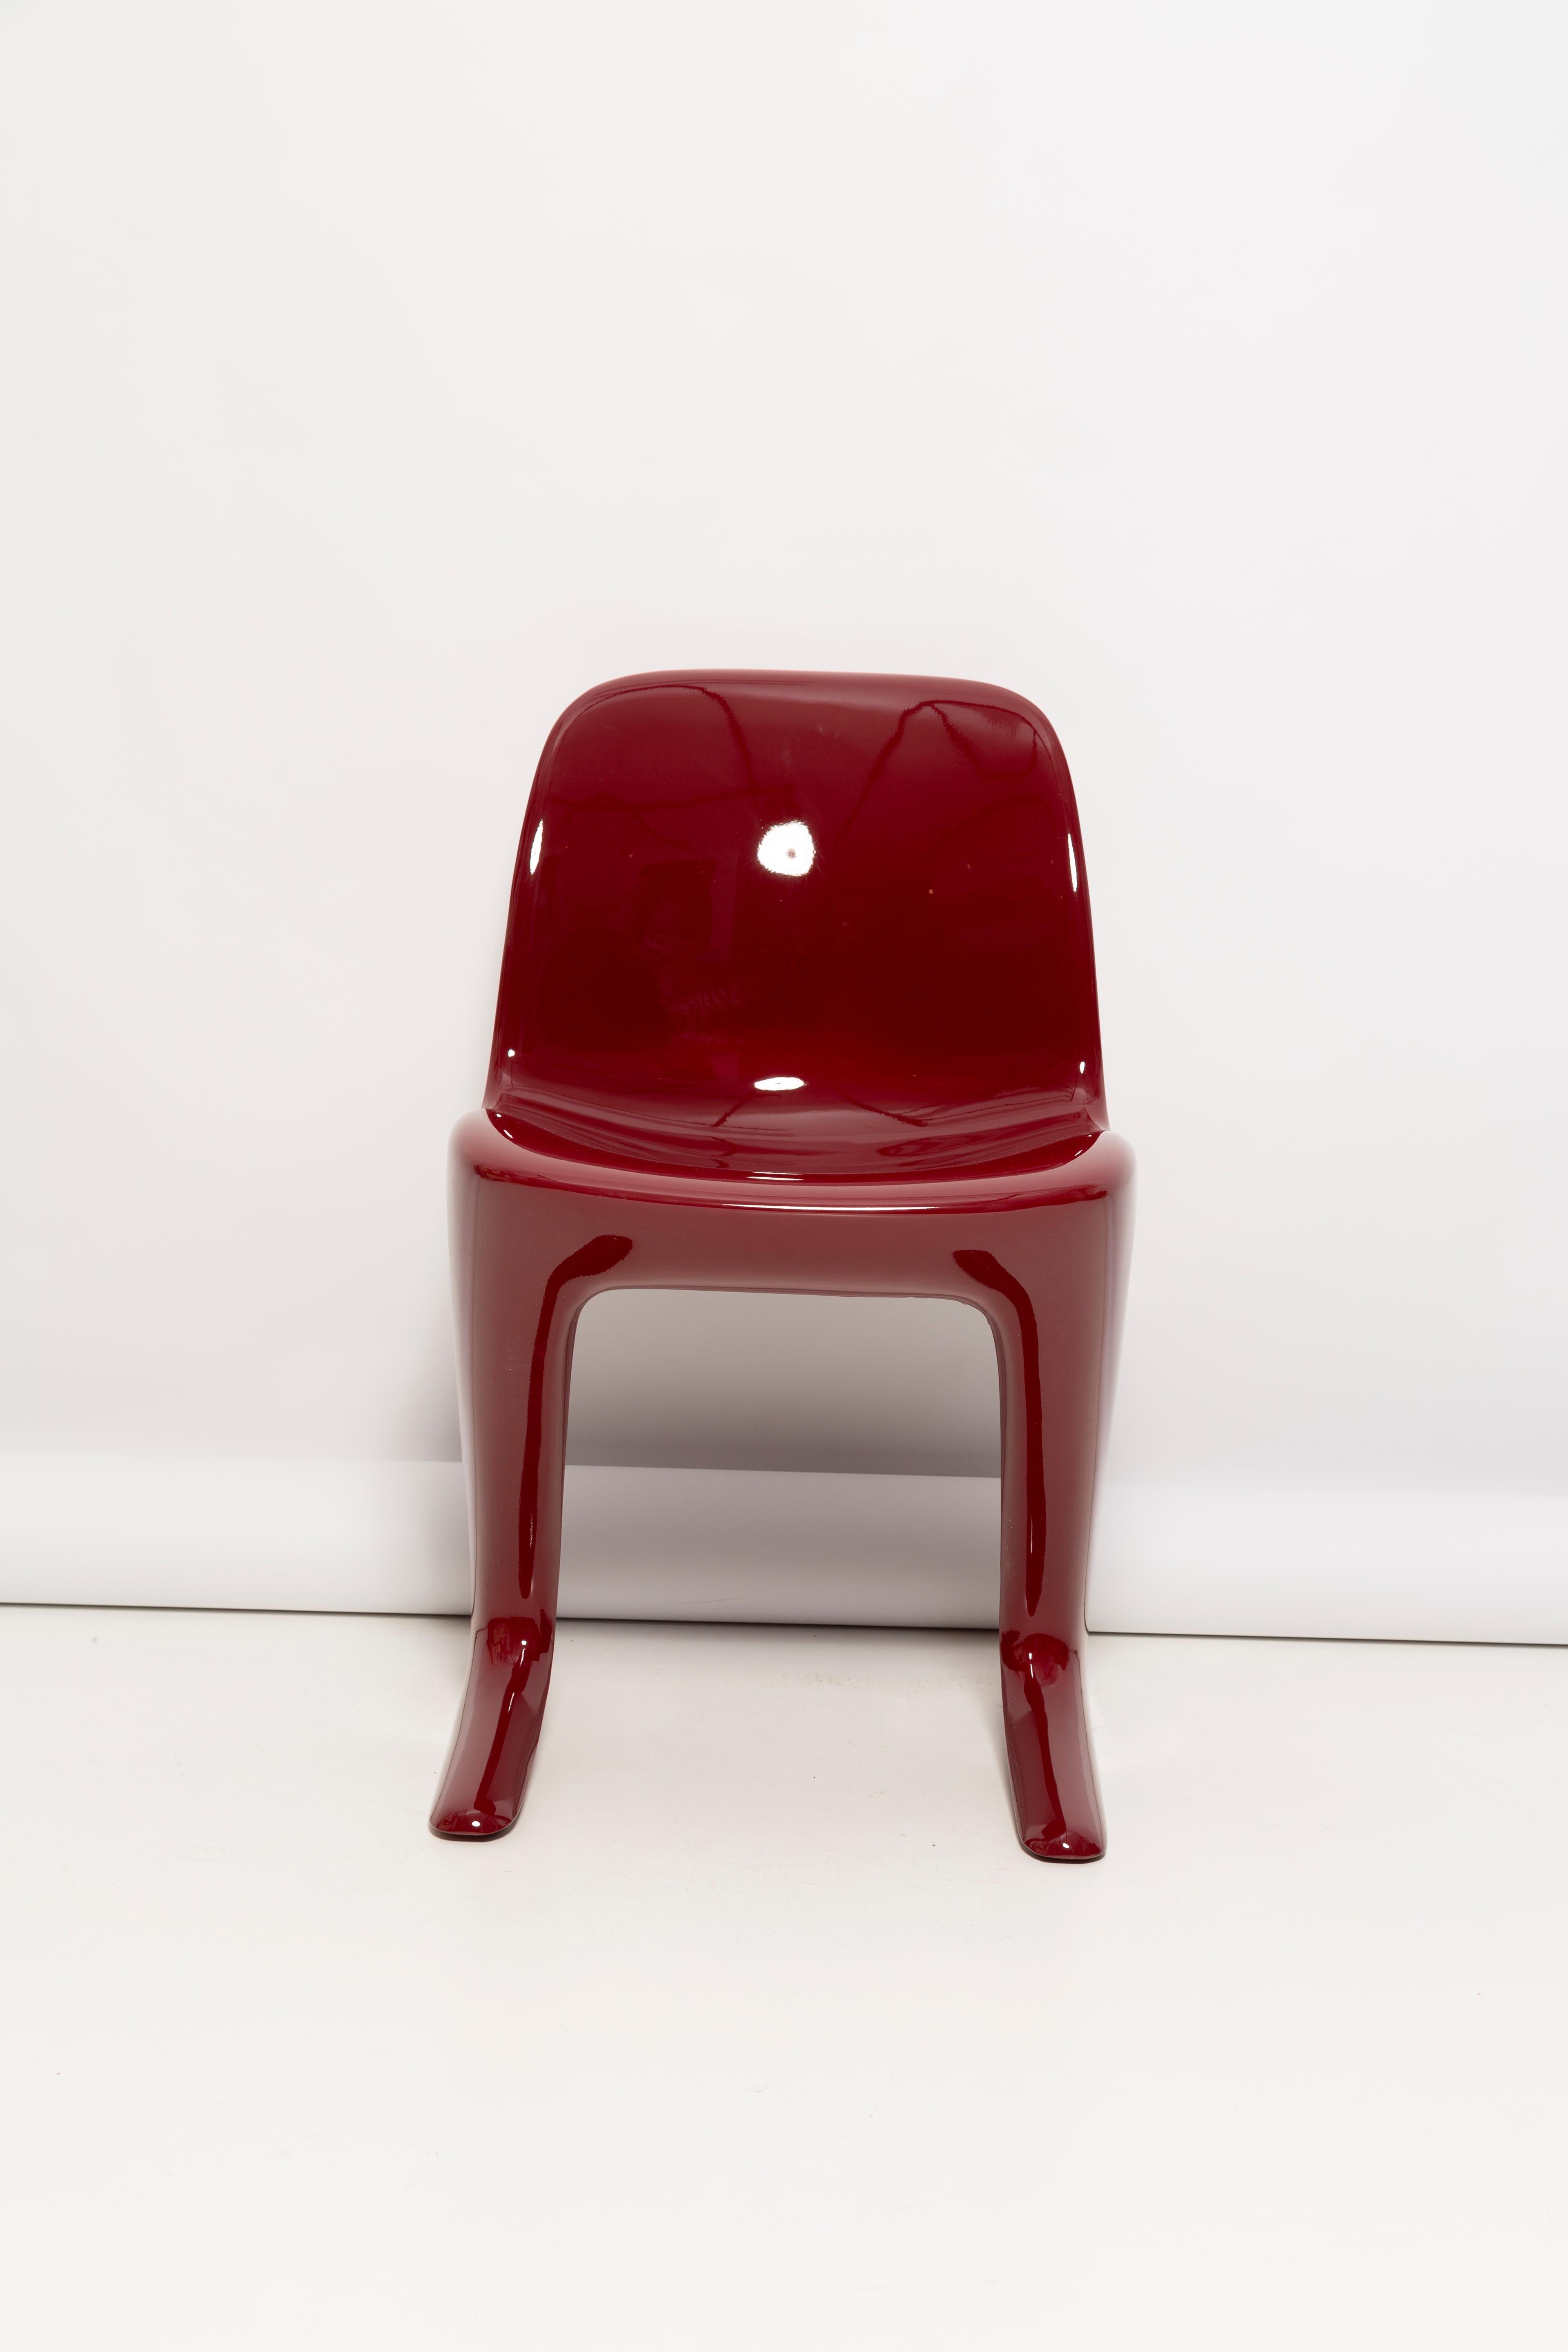 Fiberglass Dark Red Wine Kangaroo Chair Designed by Ernst Moeckl, Germany, 1968 For Sale